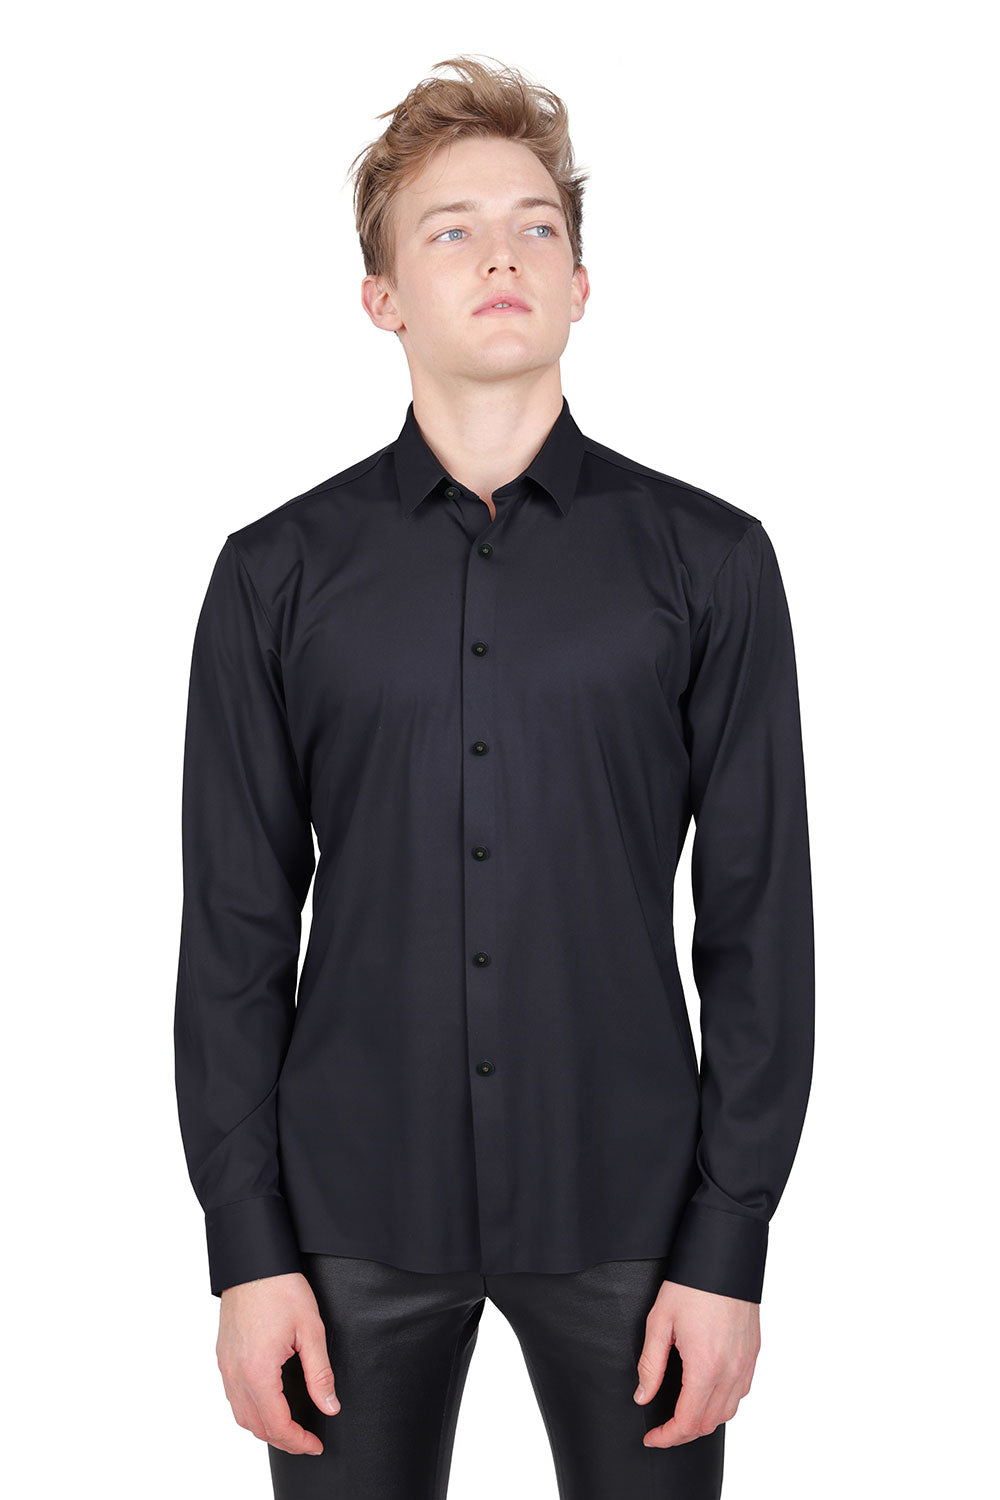 Barabas Men's Premium No Stitches Long Sleeves Shirts 2B400 Black